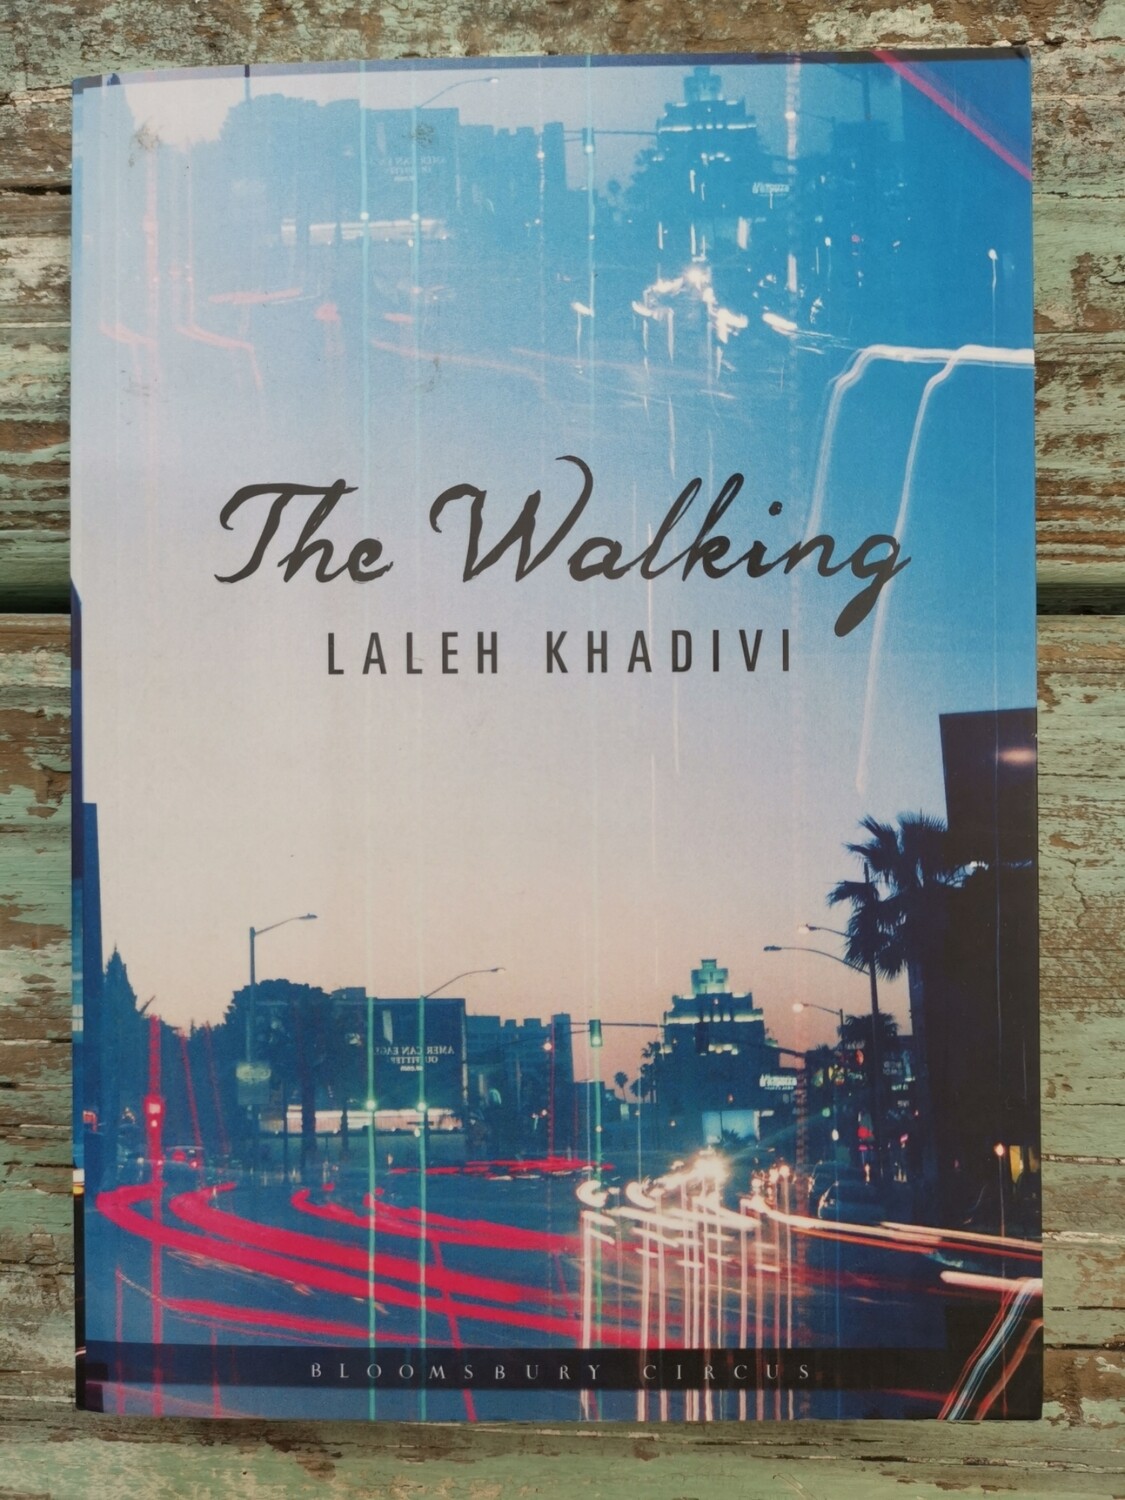 The walking, Laleh Khadivi